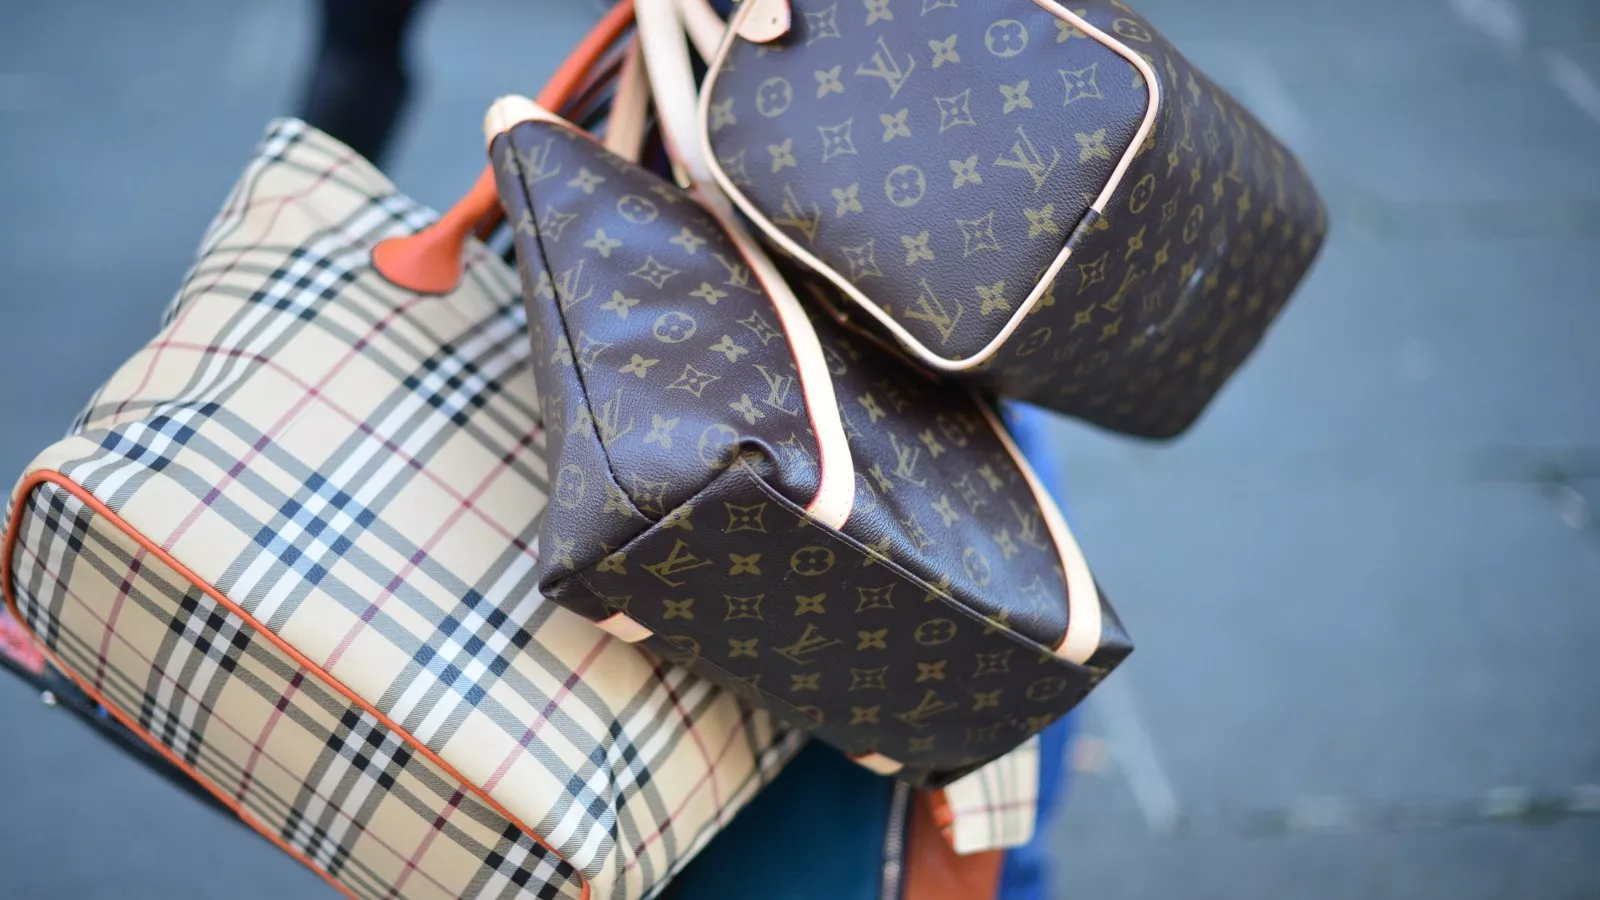 Beware of Fake Fendi, Chanel, Authorities Warn After Seizing $30M